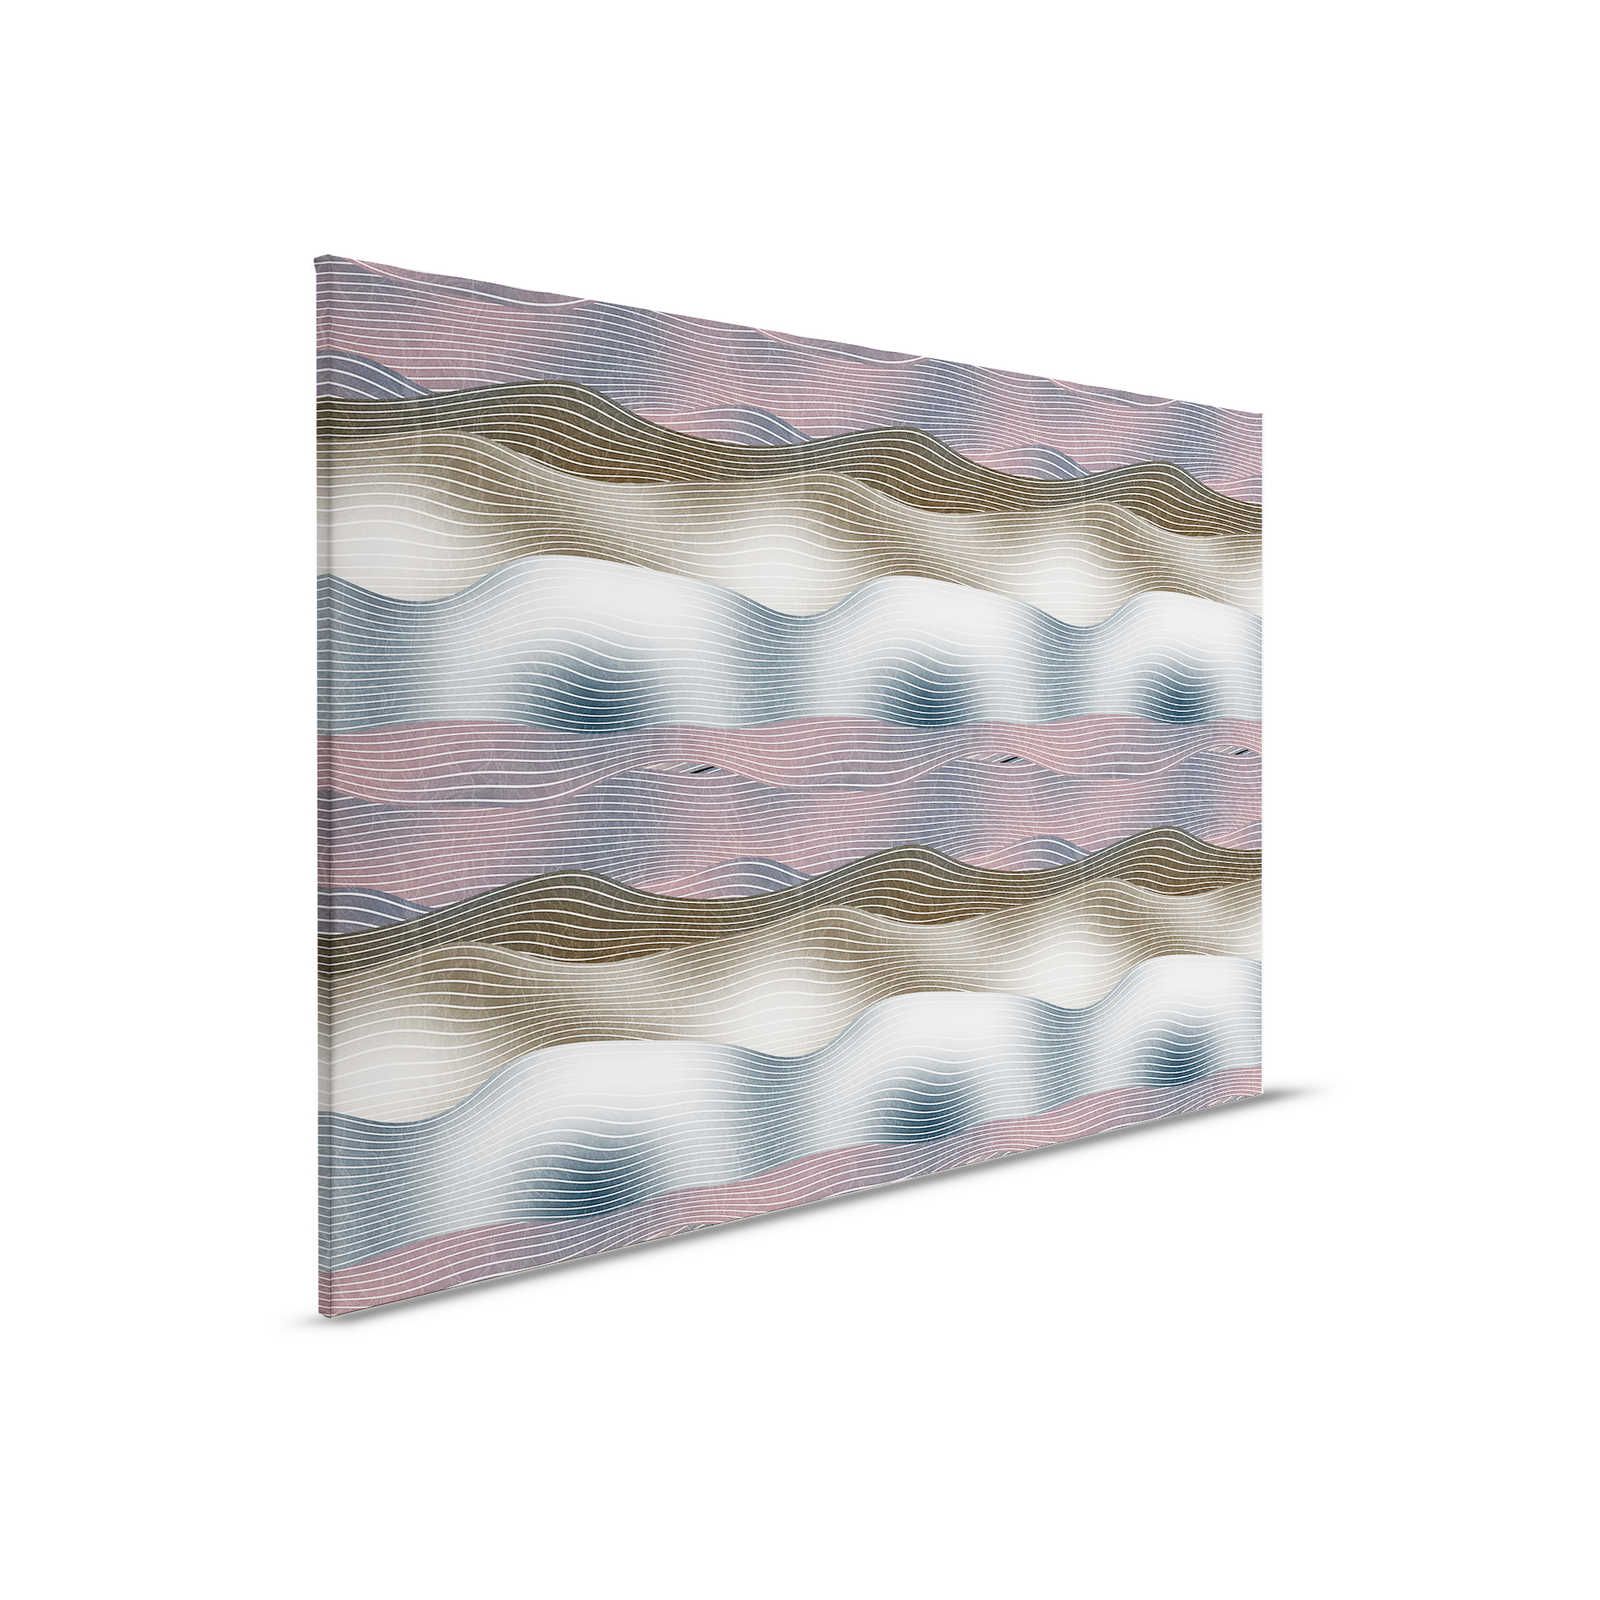         Space 2 - Retro Canvas Painting Space Design Wave Pattern - 0.90 m x 0.60 m
    